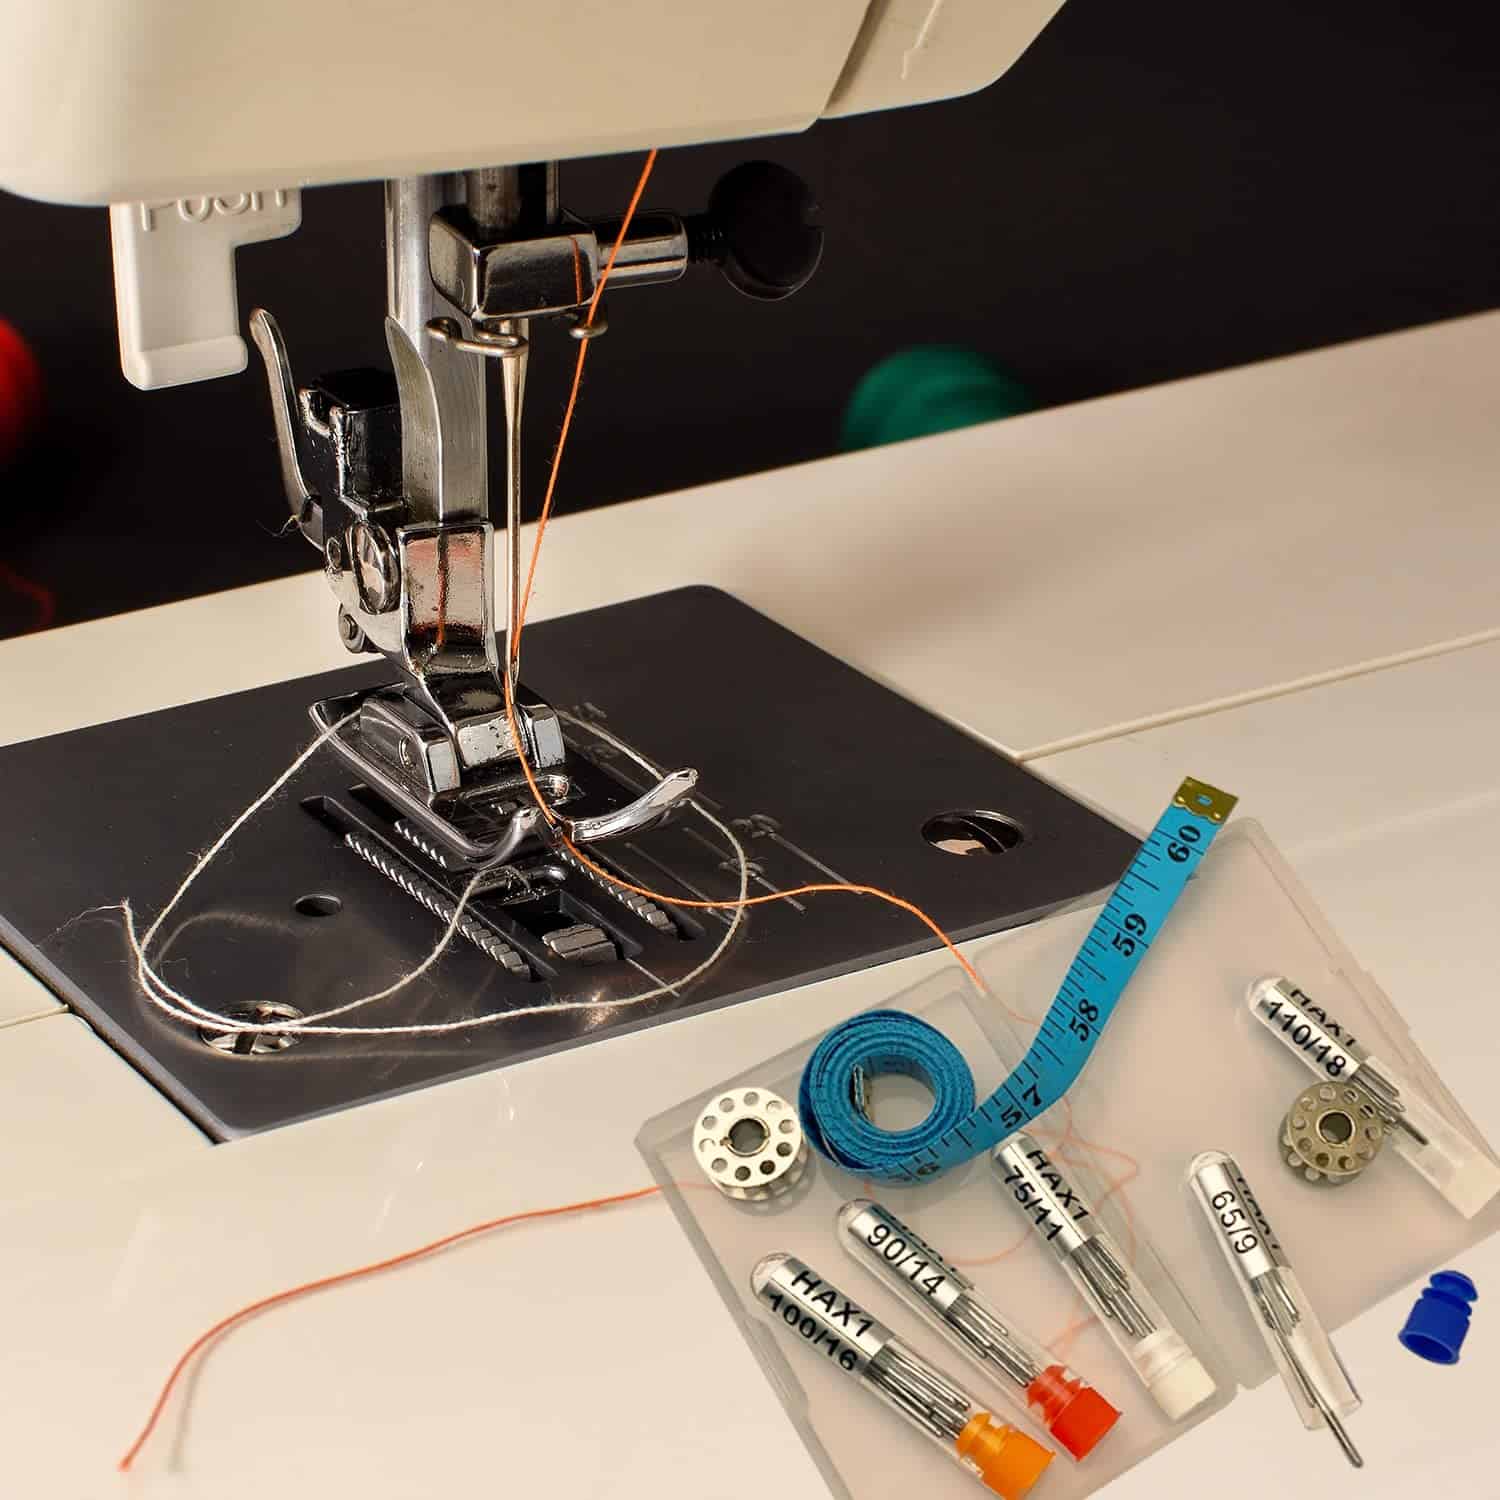 sewing machine needle